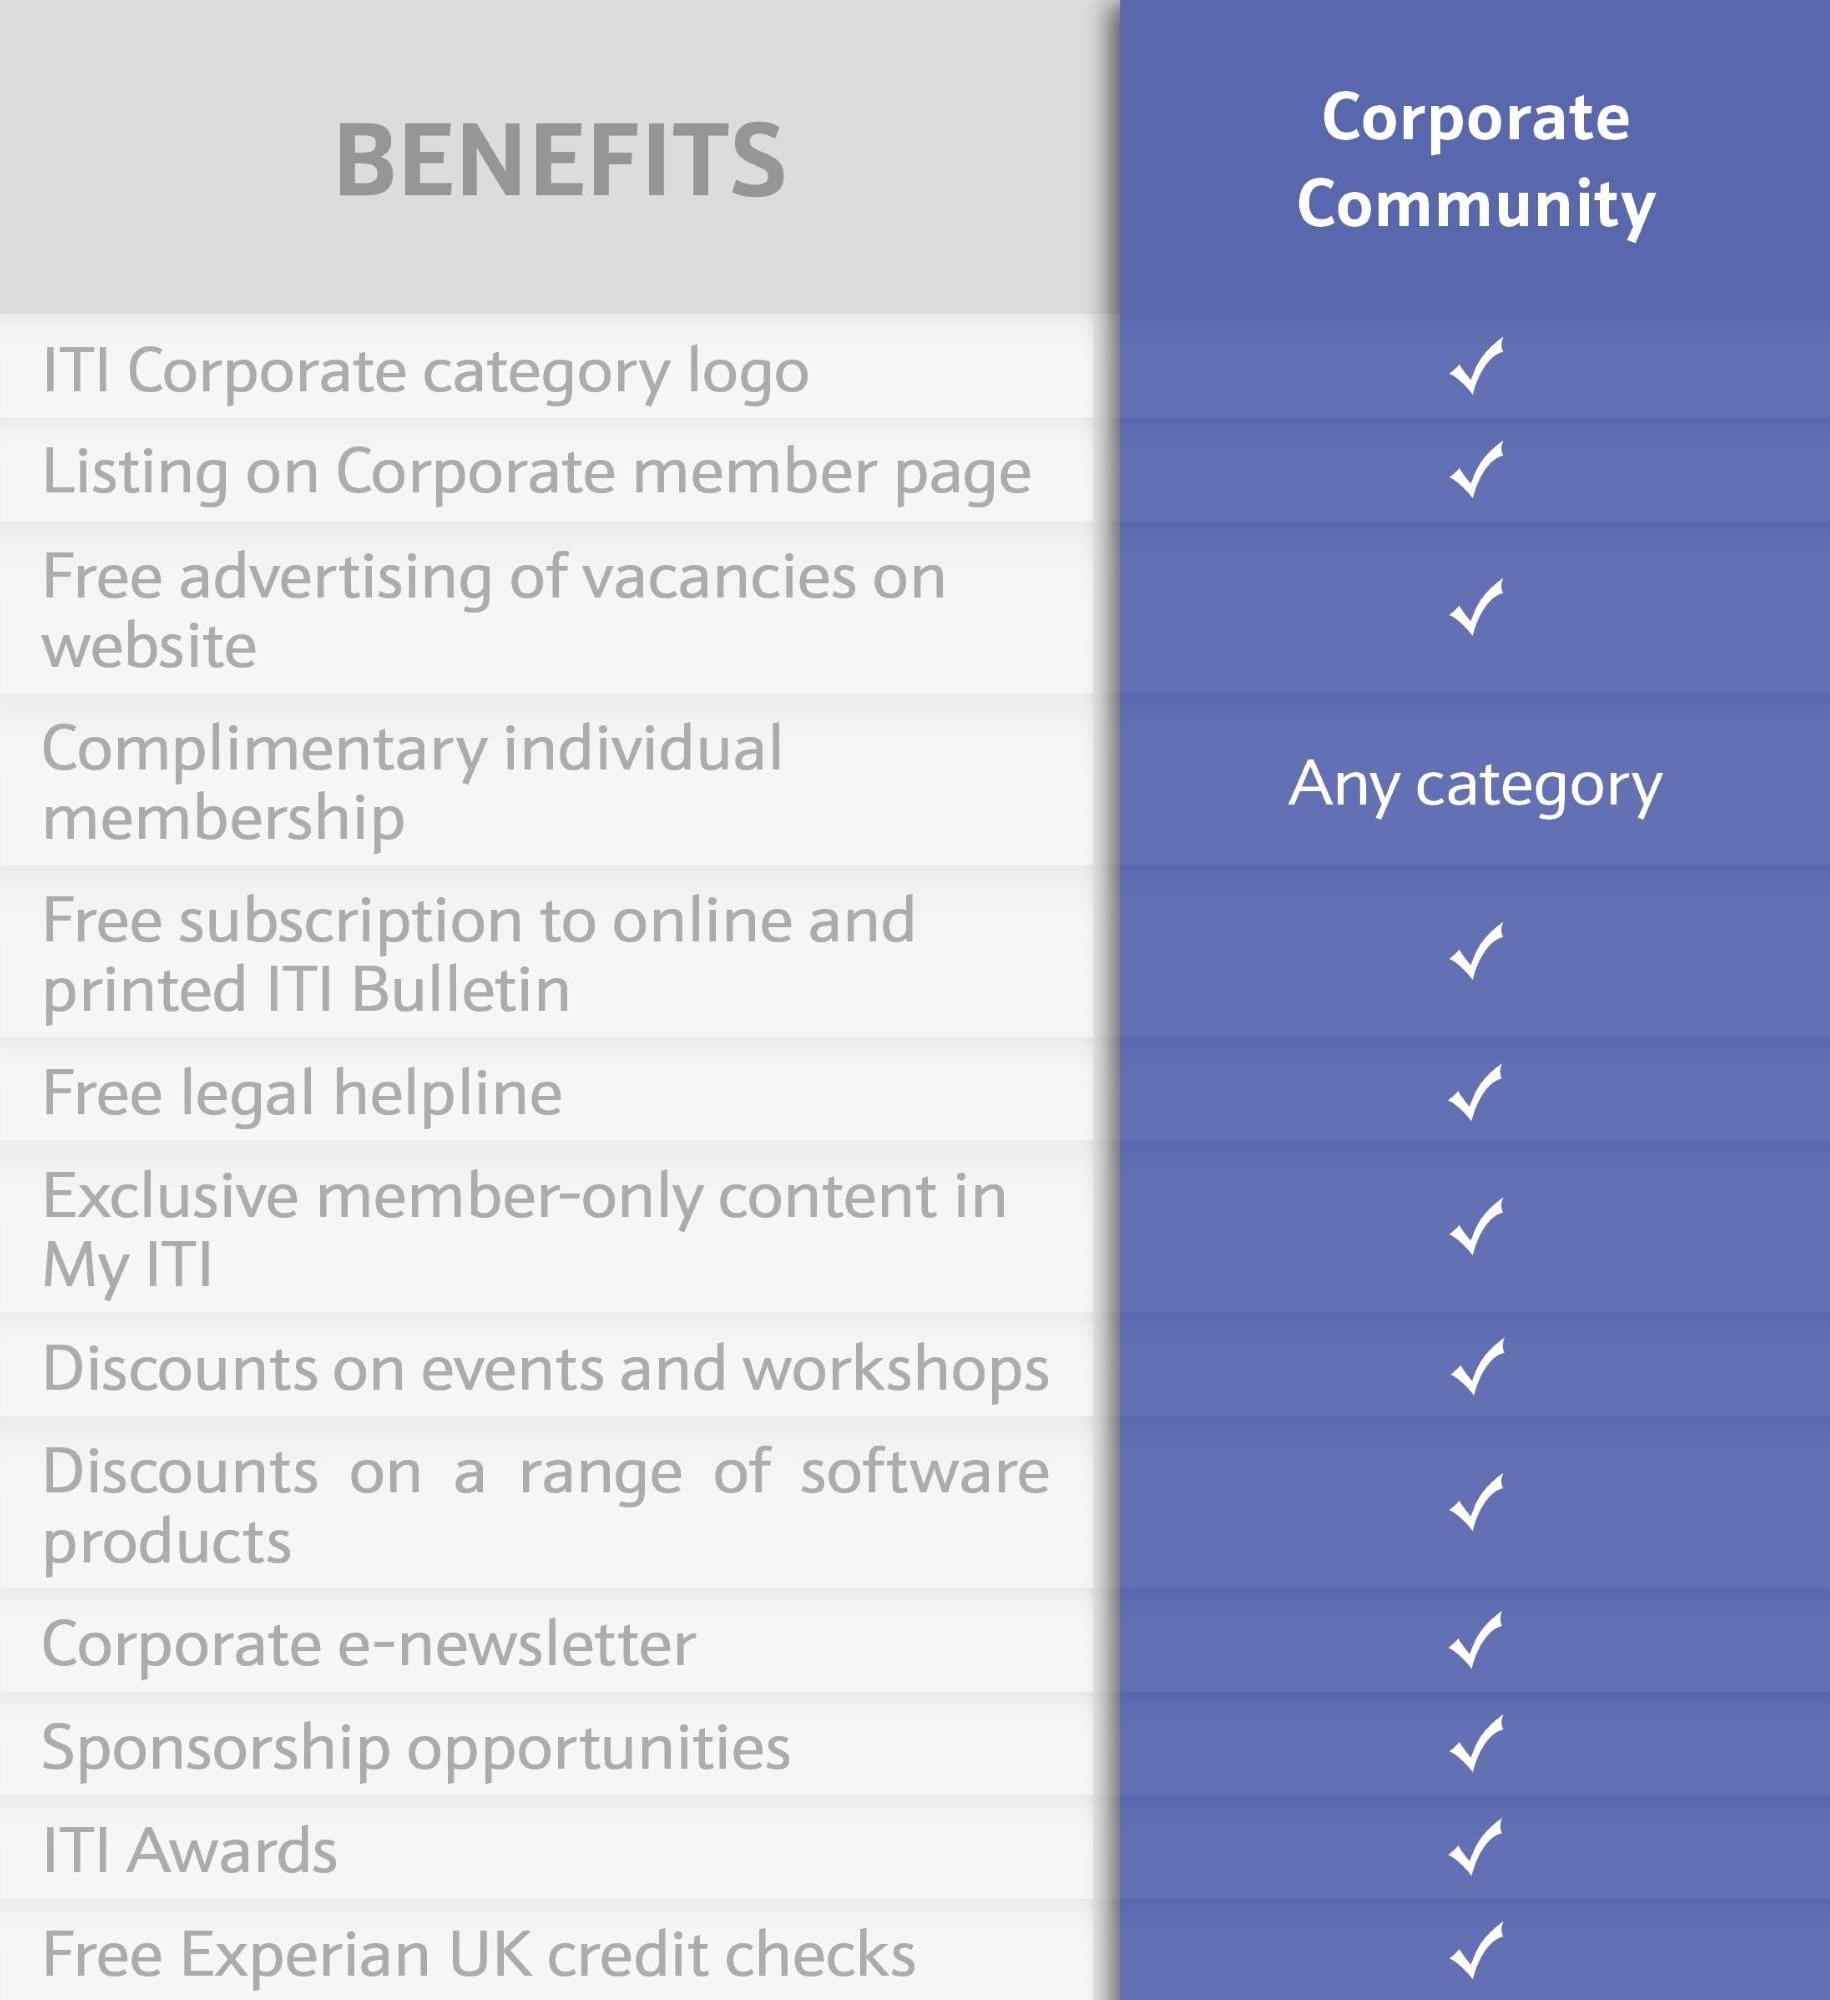 Corporate Community benefits